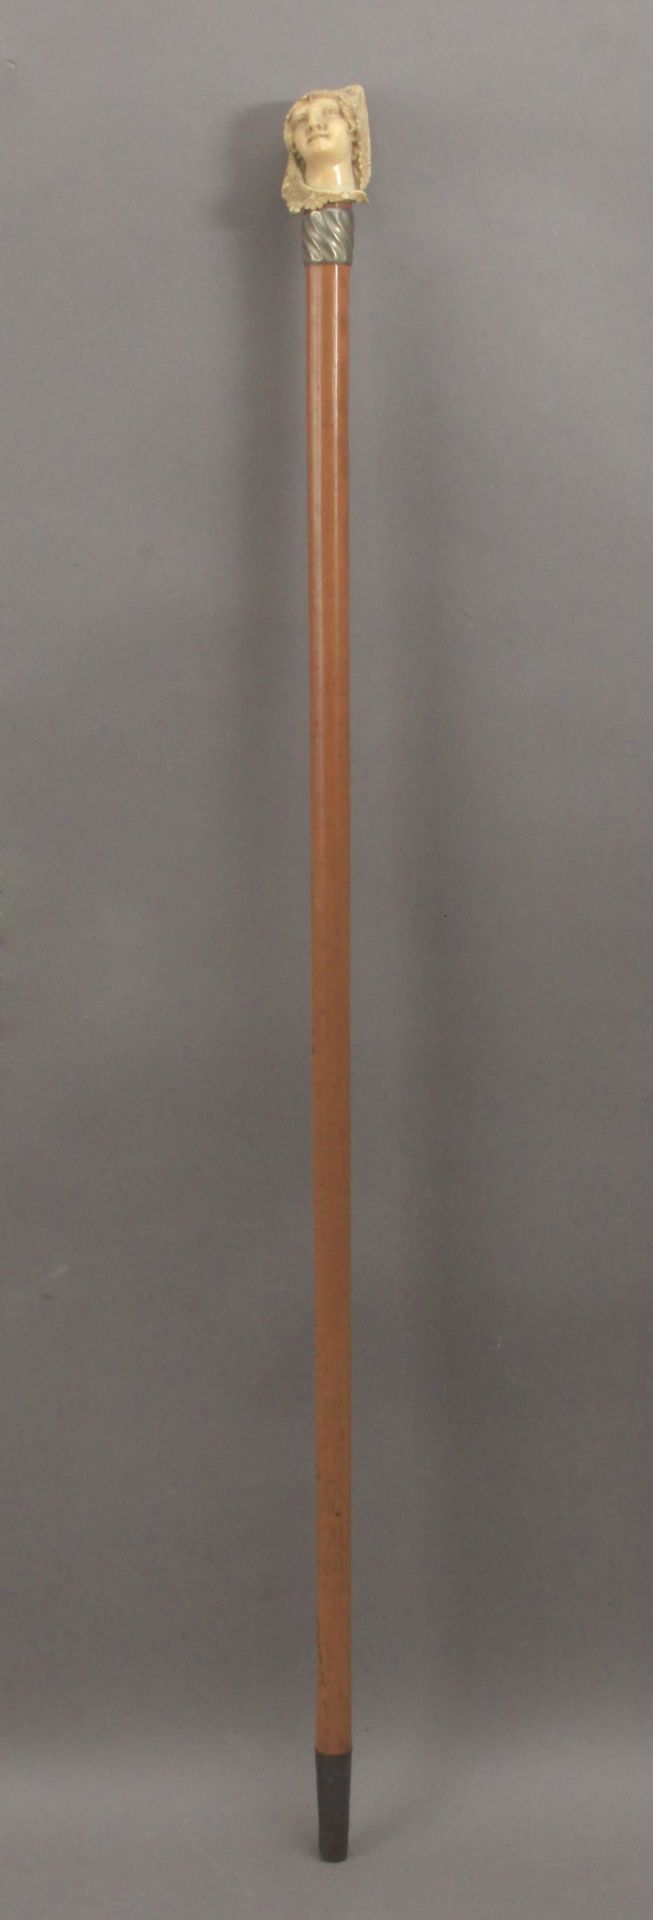 A 20th century Spanish walking cane - Image 4 of 8